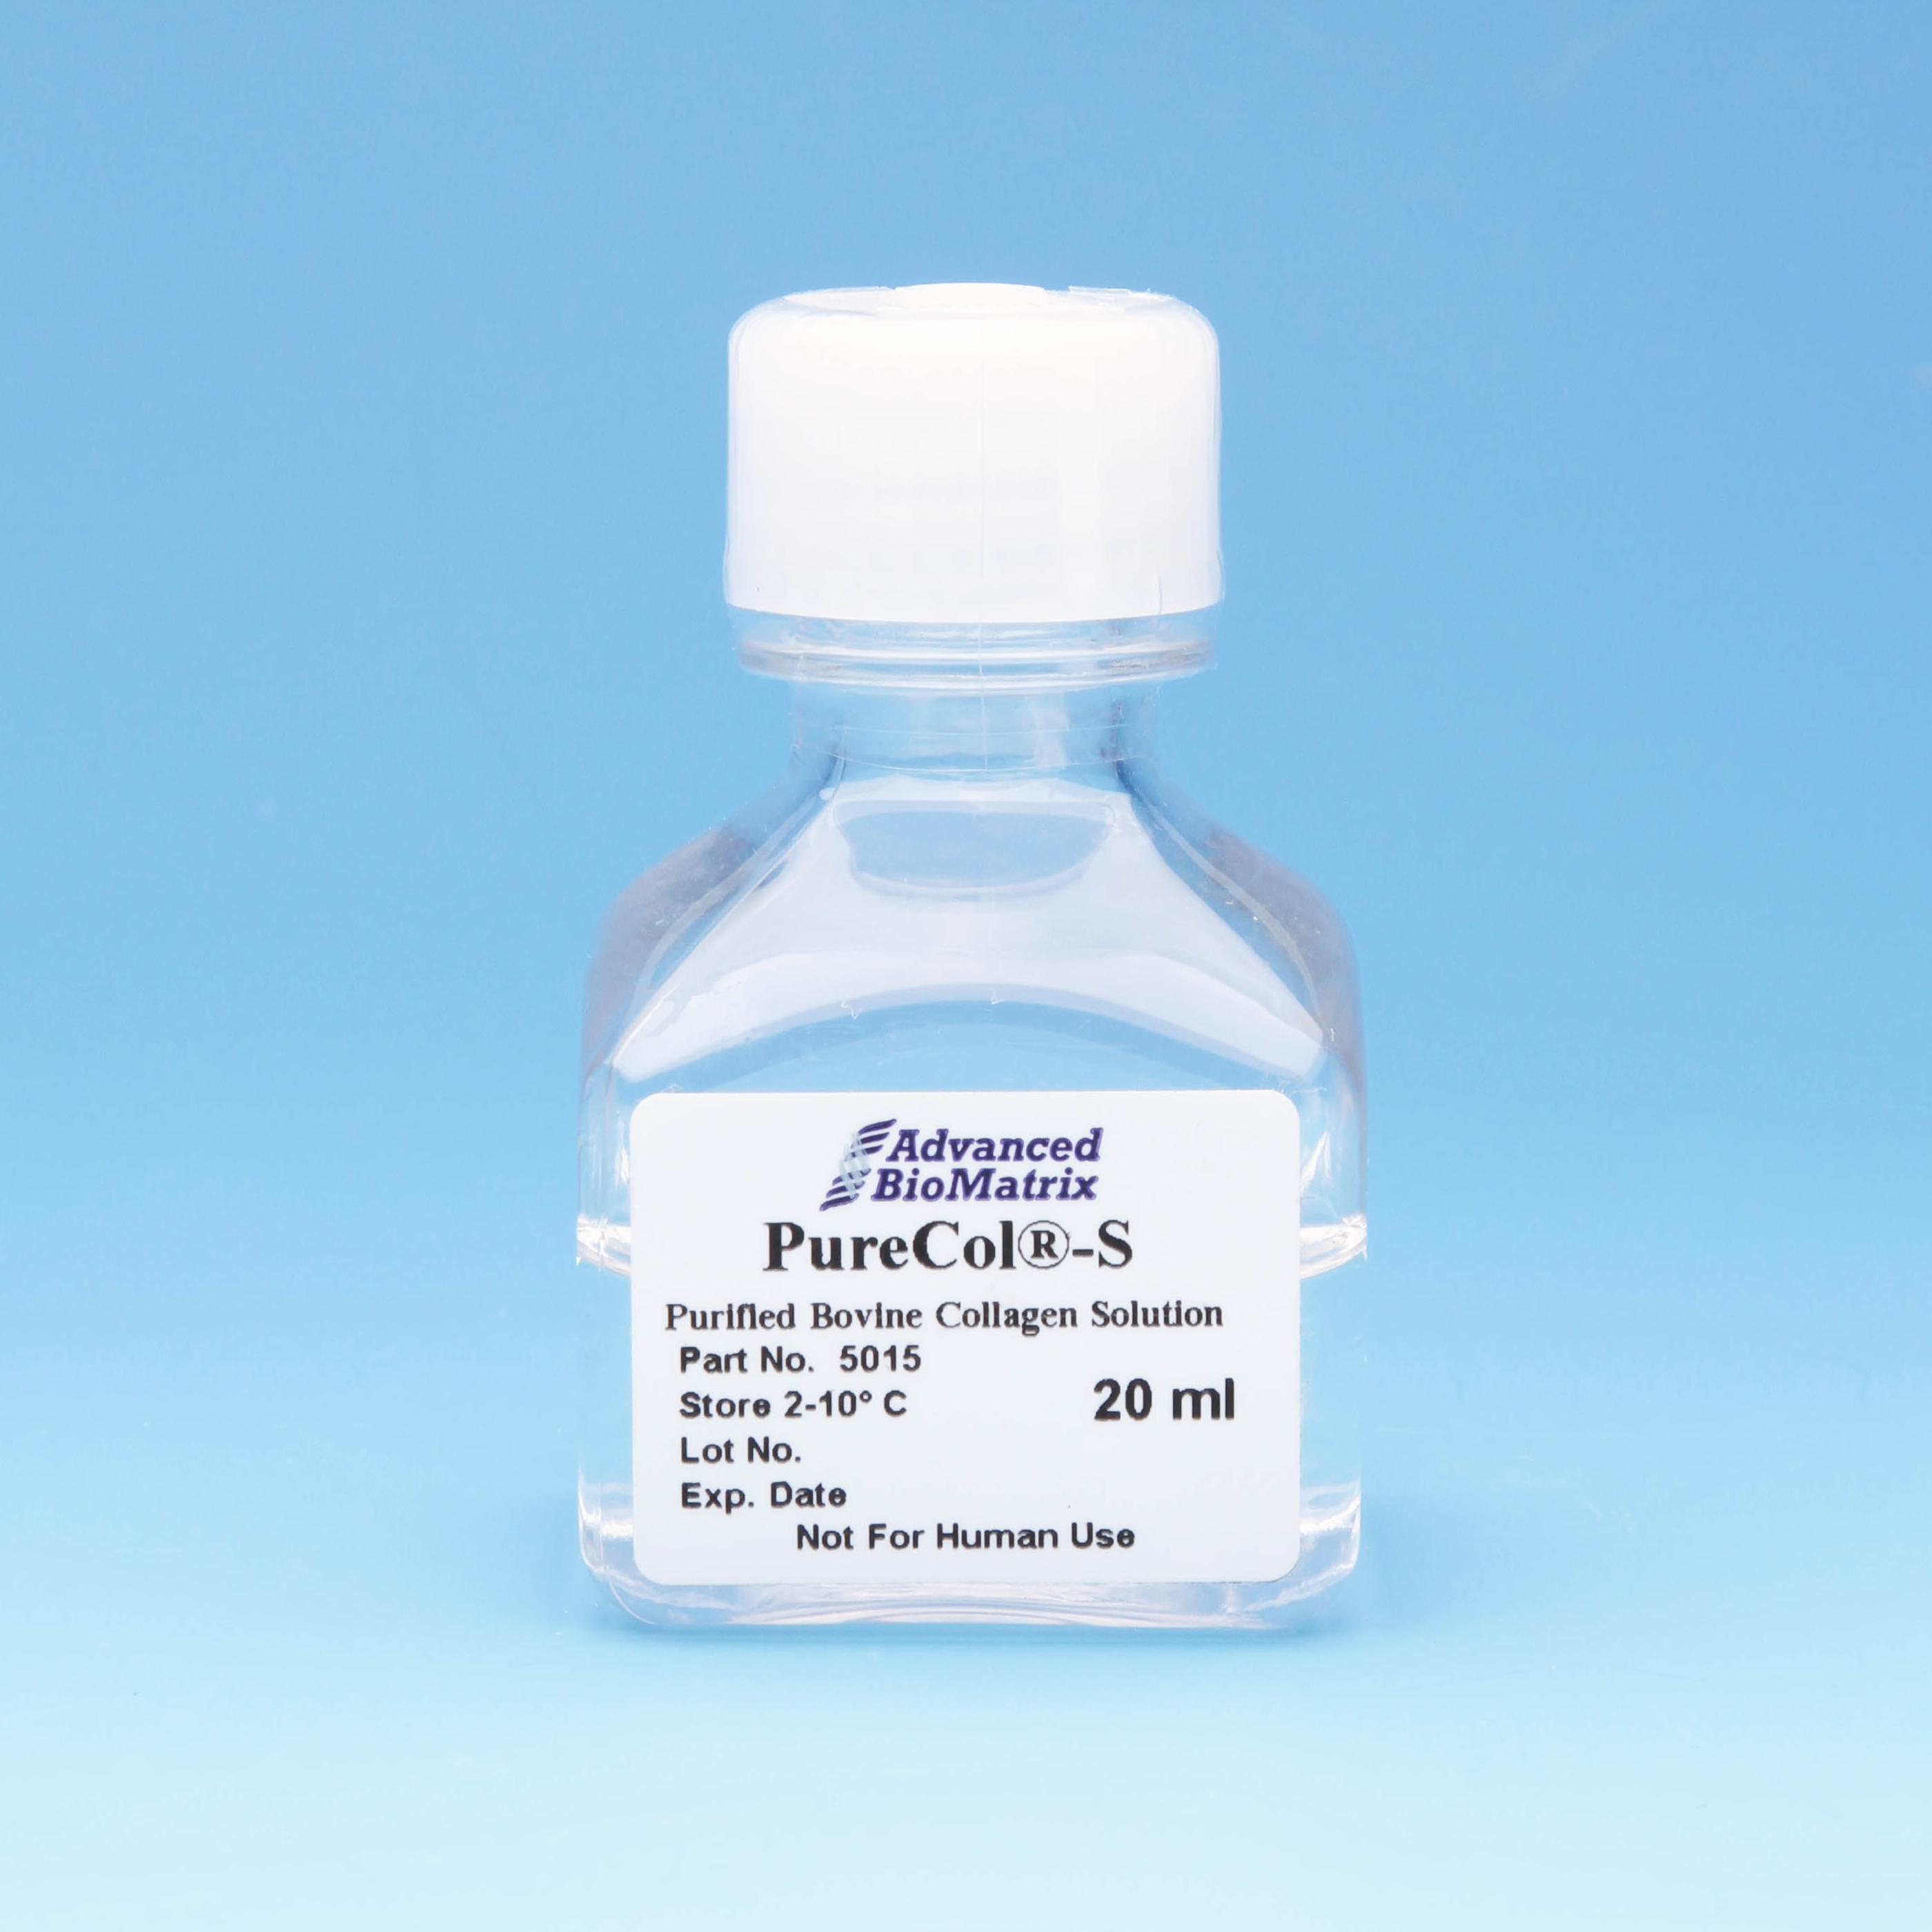 PureCol-S Collagen Standard 3 mg/ml from Advanced BioMatrix